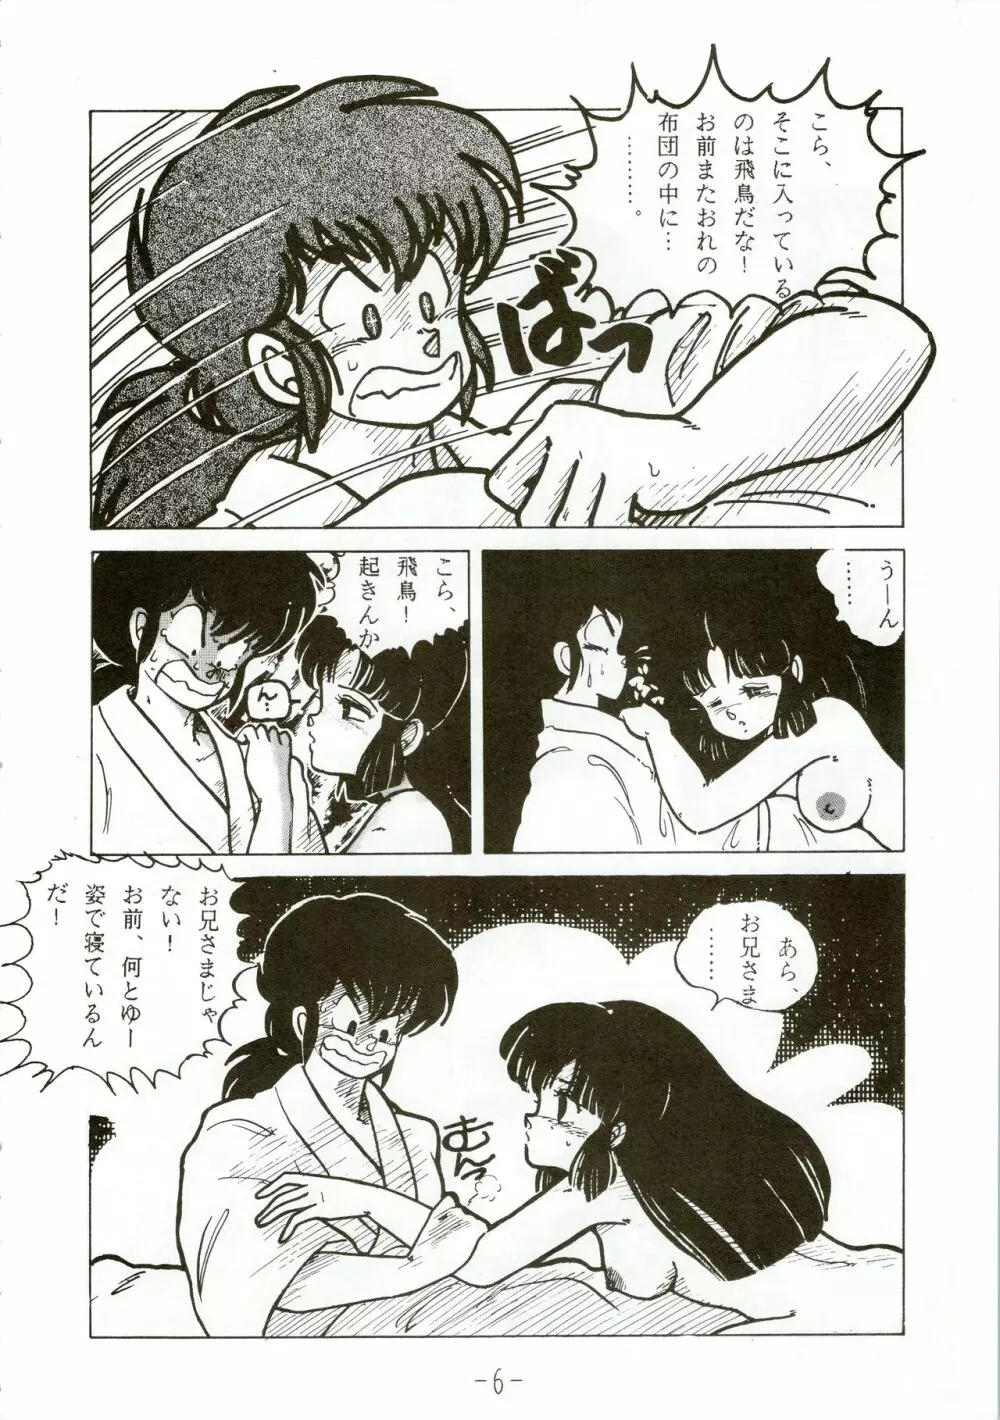 甲冑伝説 - page6